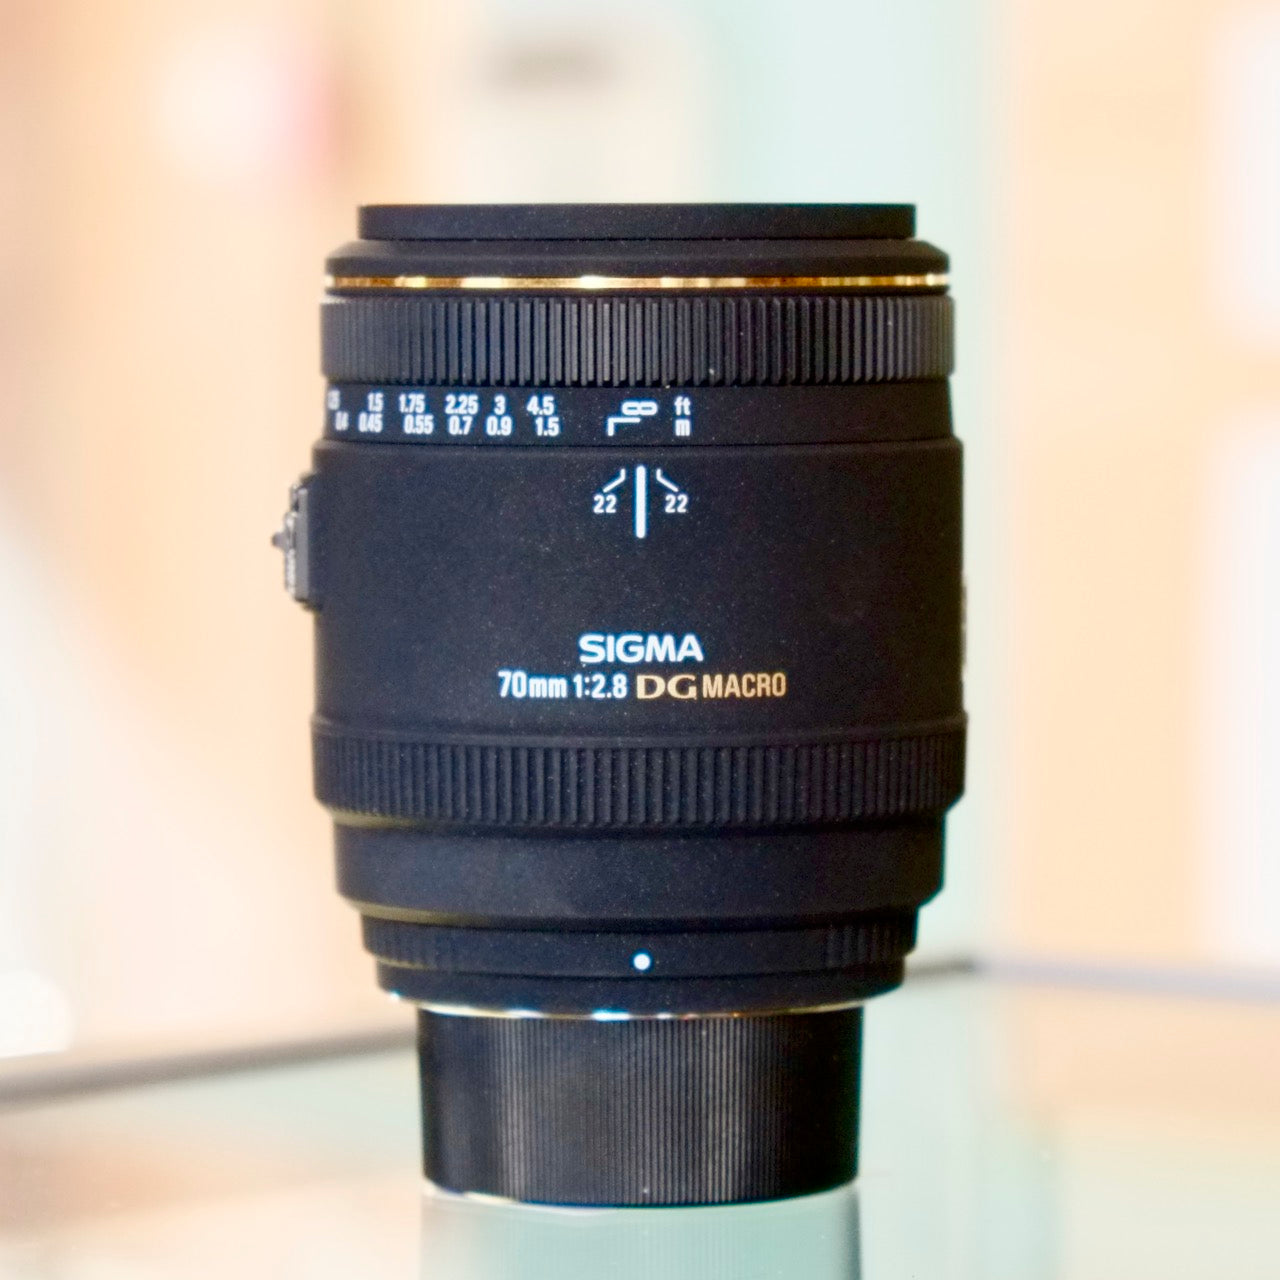 Sigma 70mm f2.8 DG Macro for Nikon F